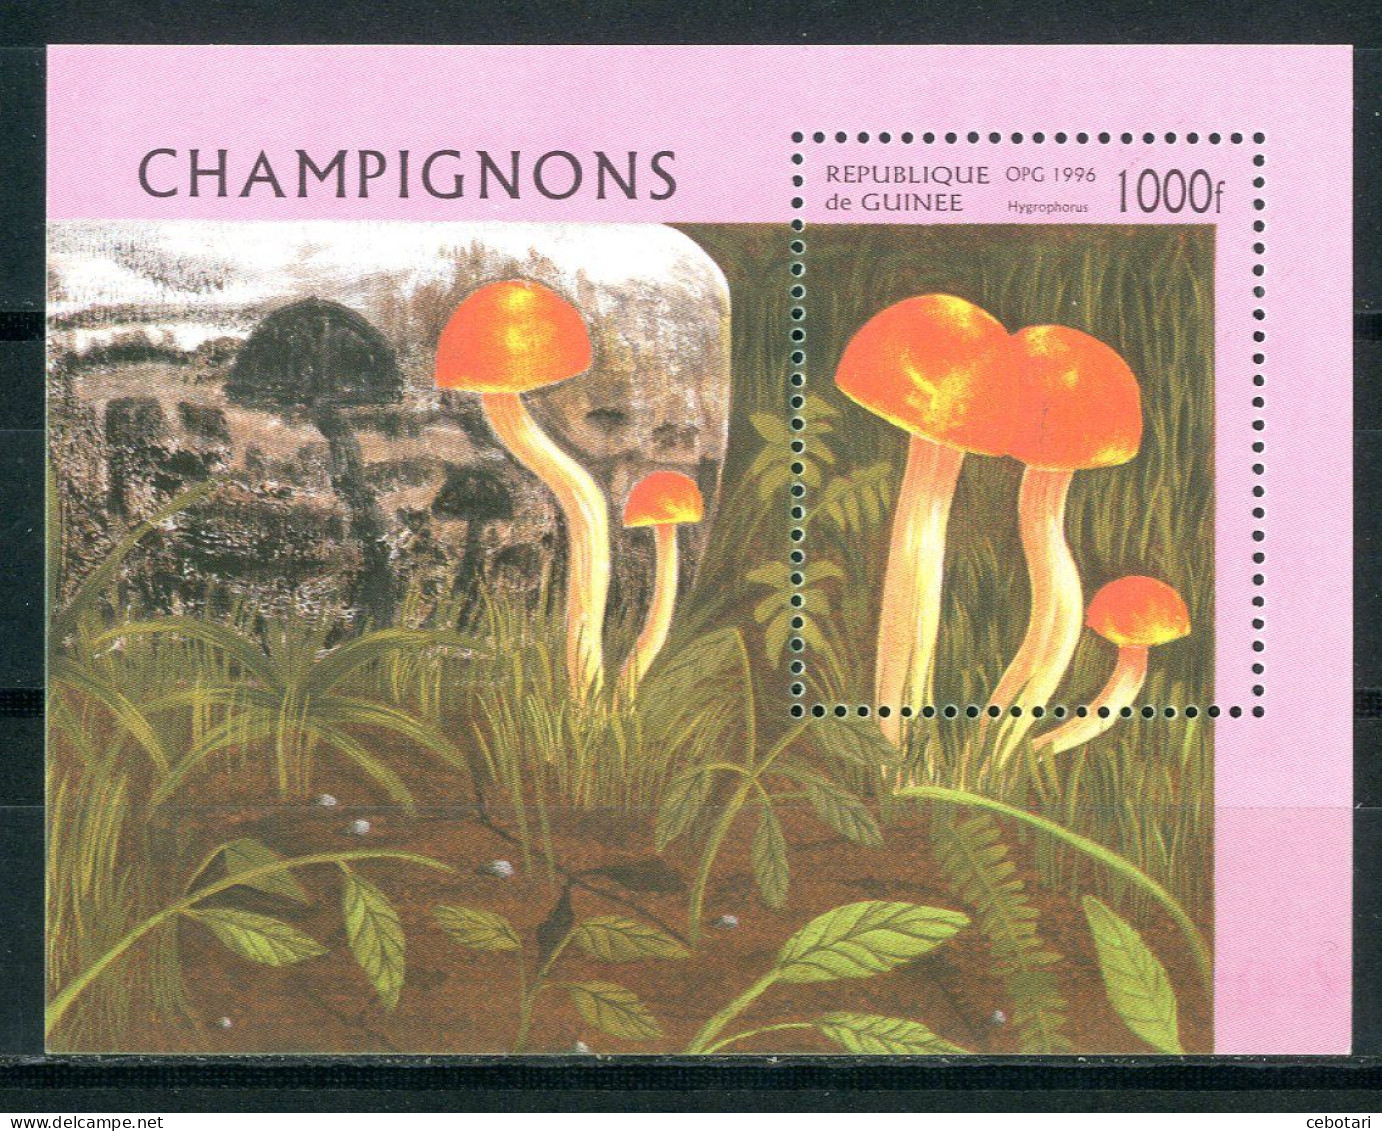 GUINEA / GUINEE 1996** - Funghi / Mushrooms - Miniblock. - Pilze